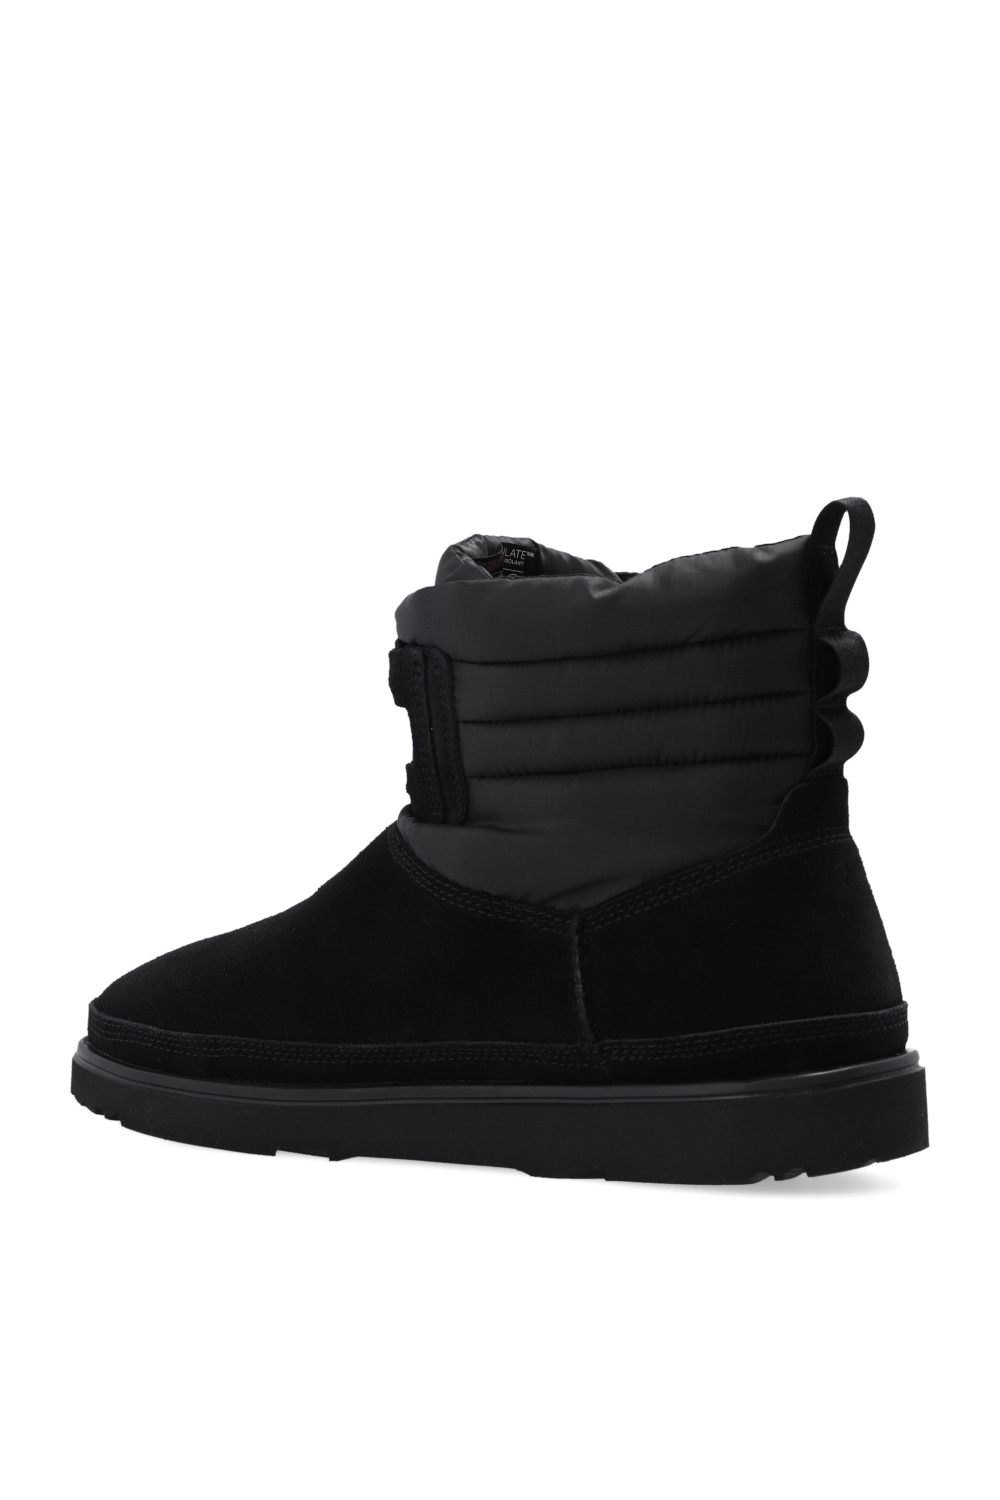 StclaircomoShops | Up Weather' snow boots | Men's Shoes - Куртка